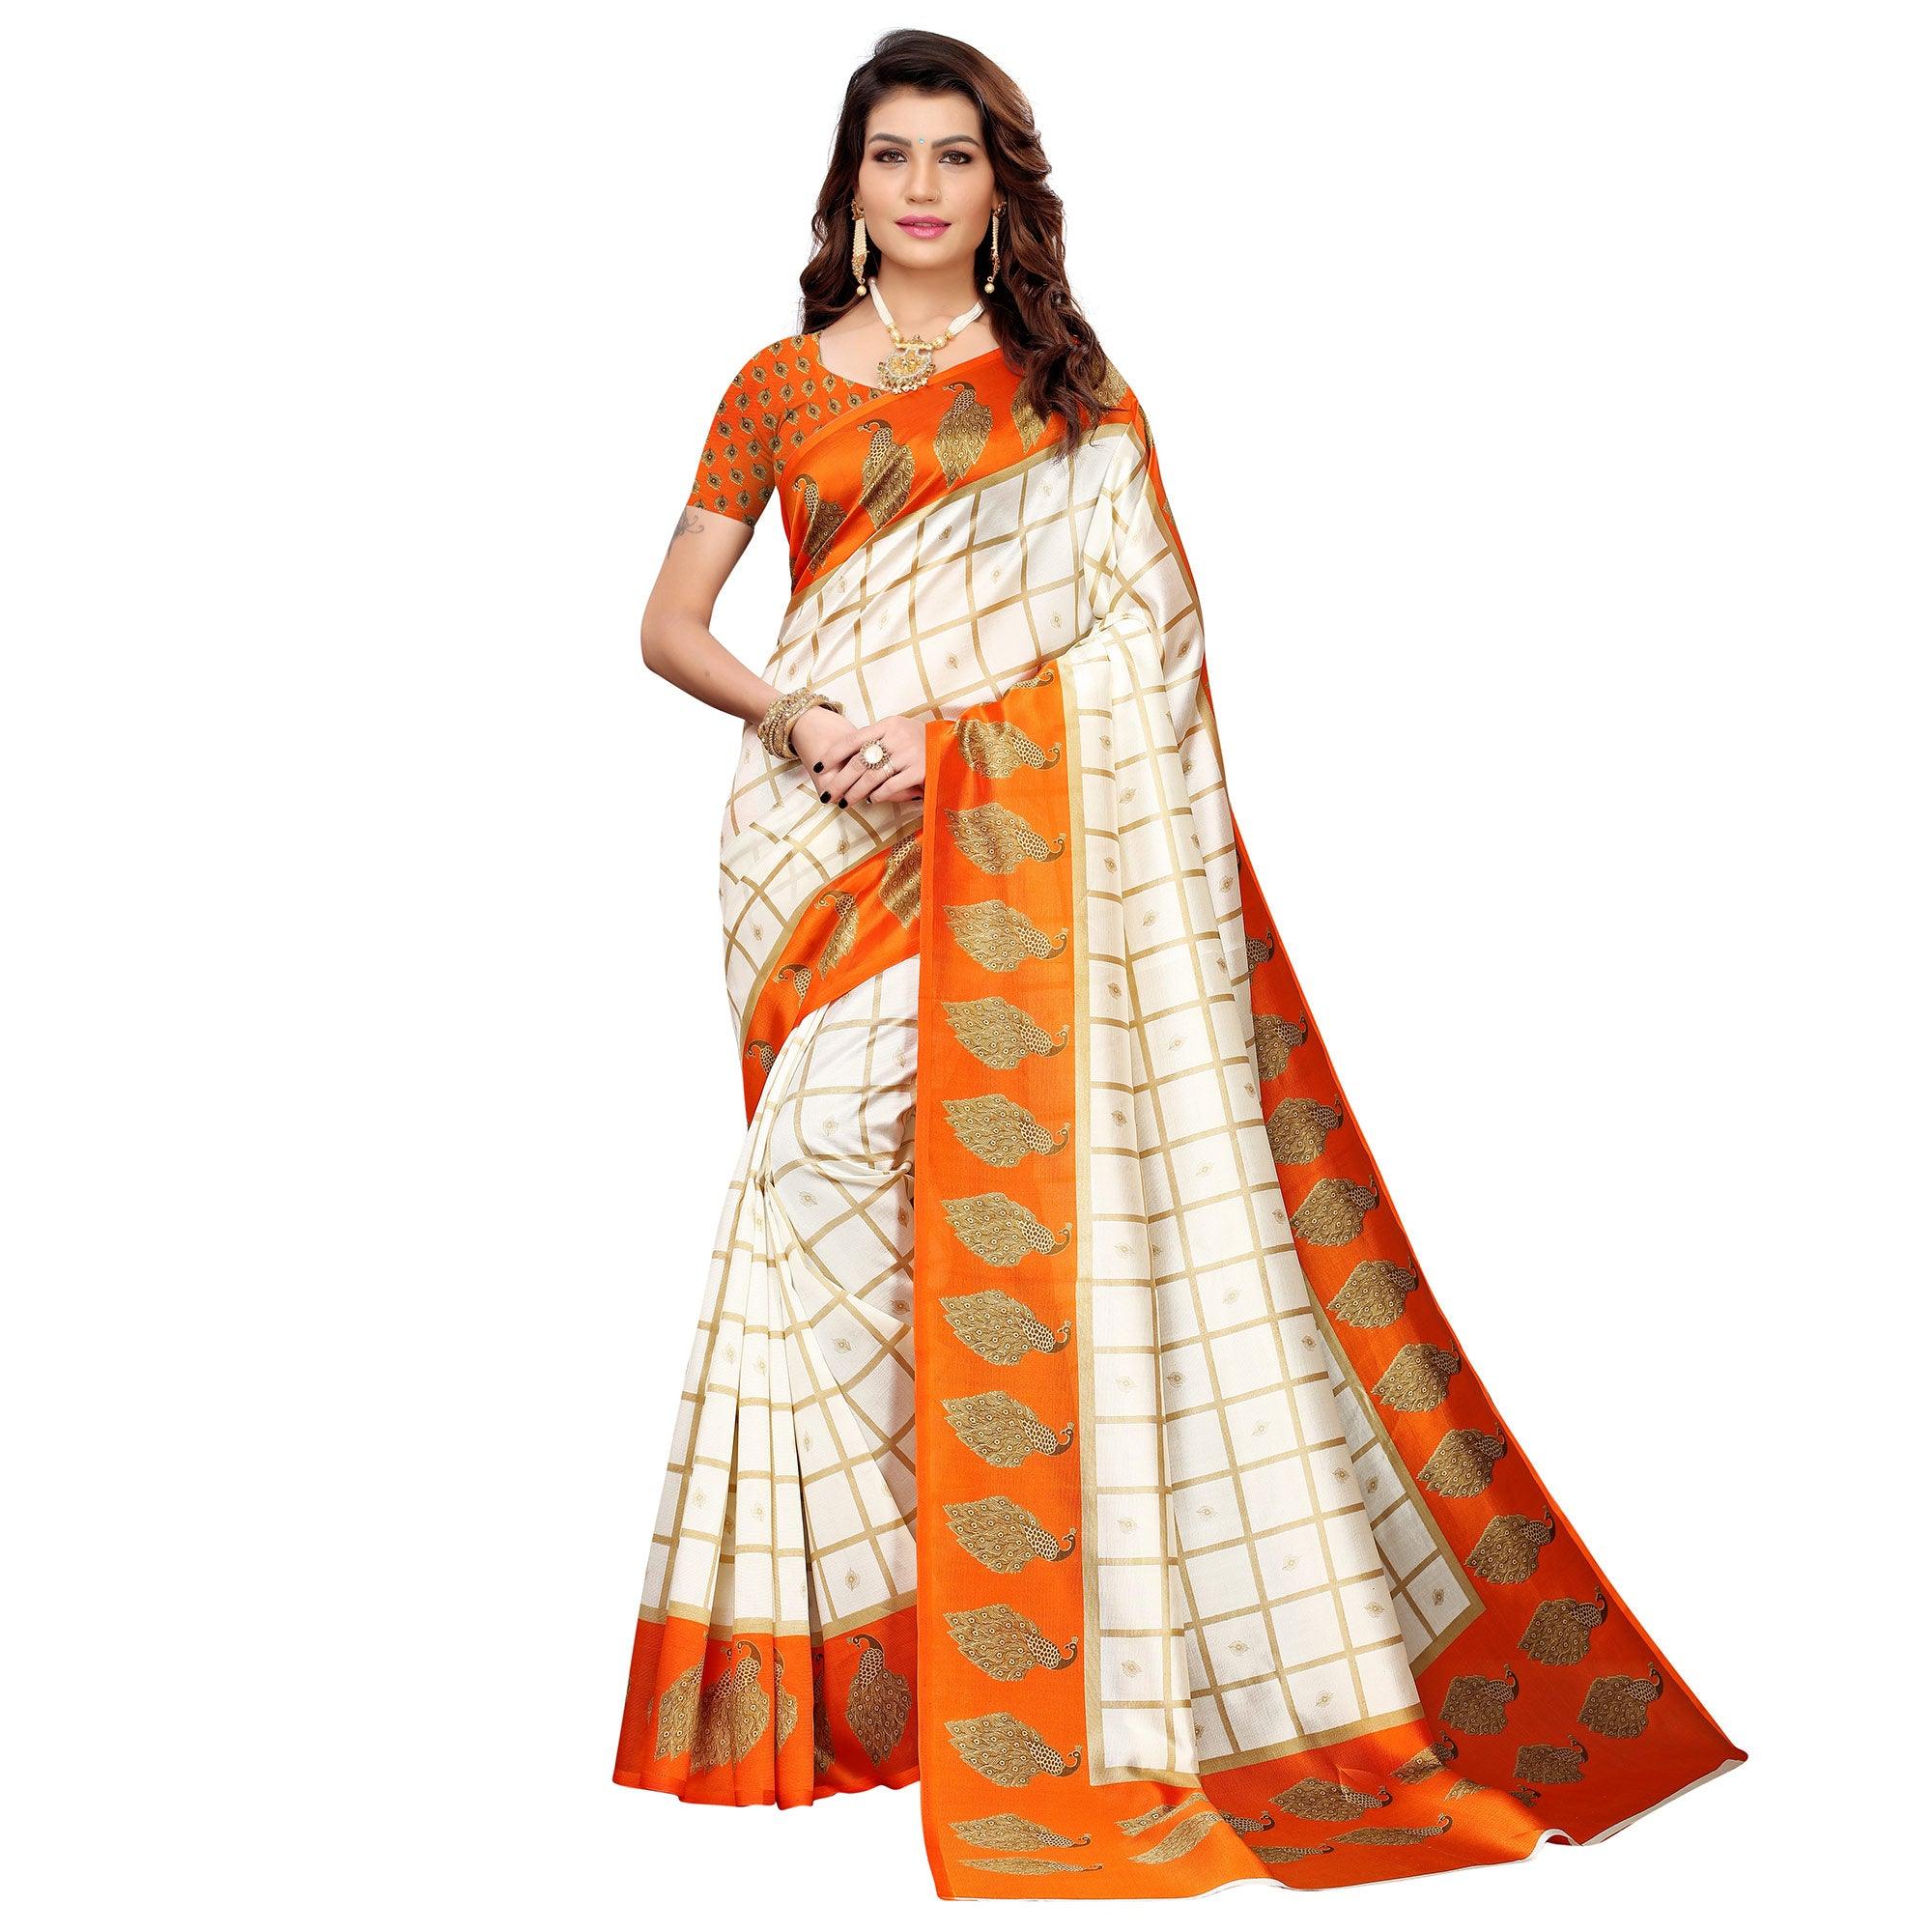 Ravishing Off White-Orange Colored Casual Printed Mysore Silk Saree - Peachmode